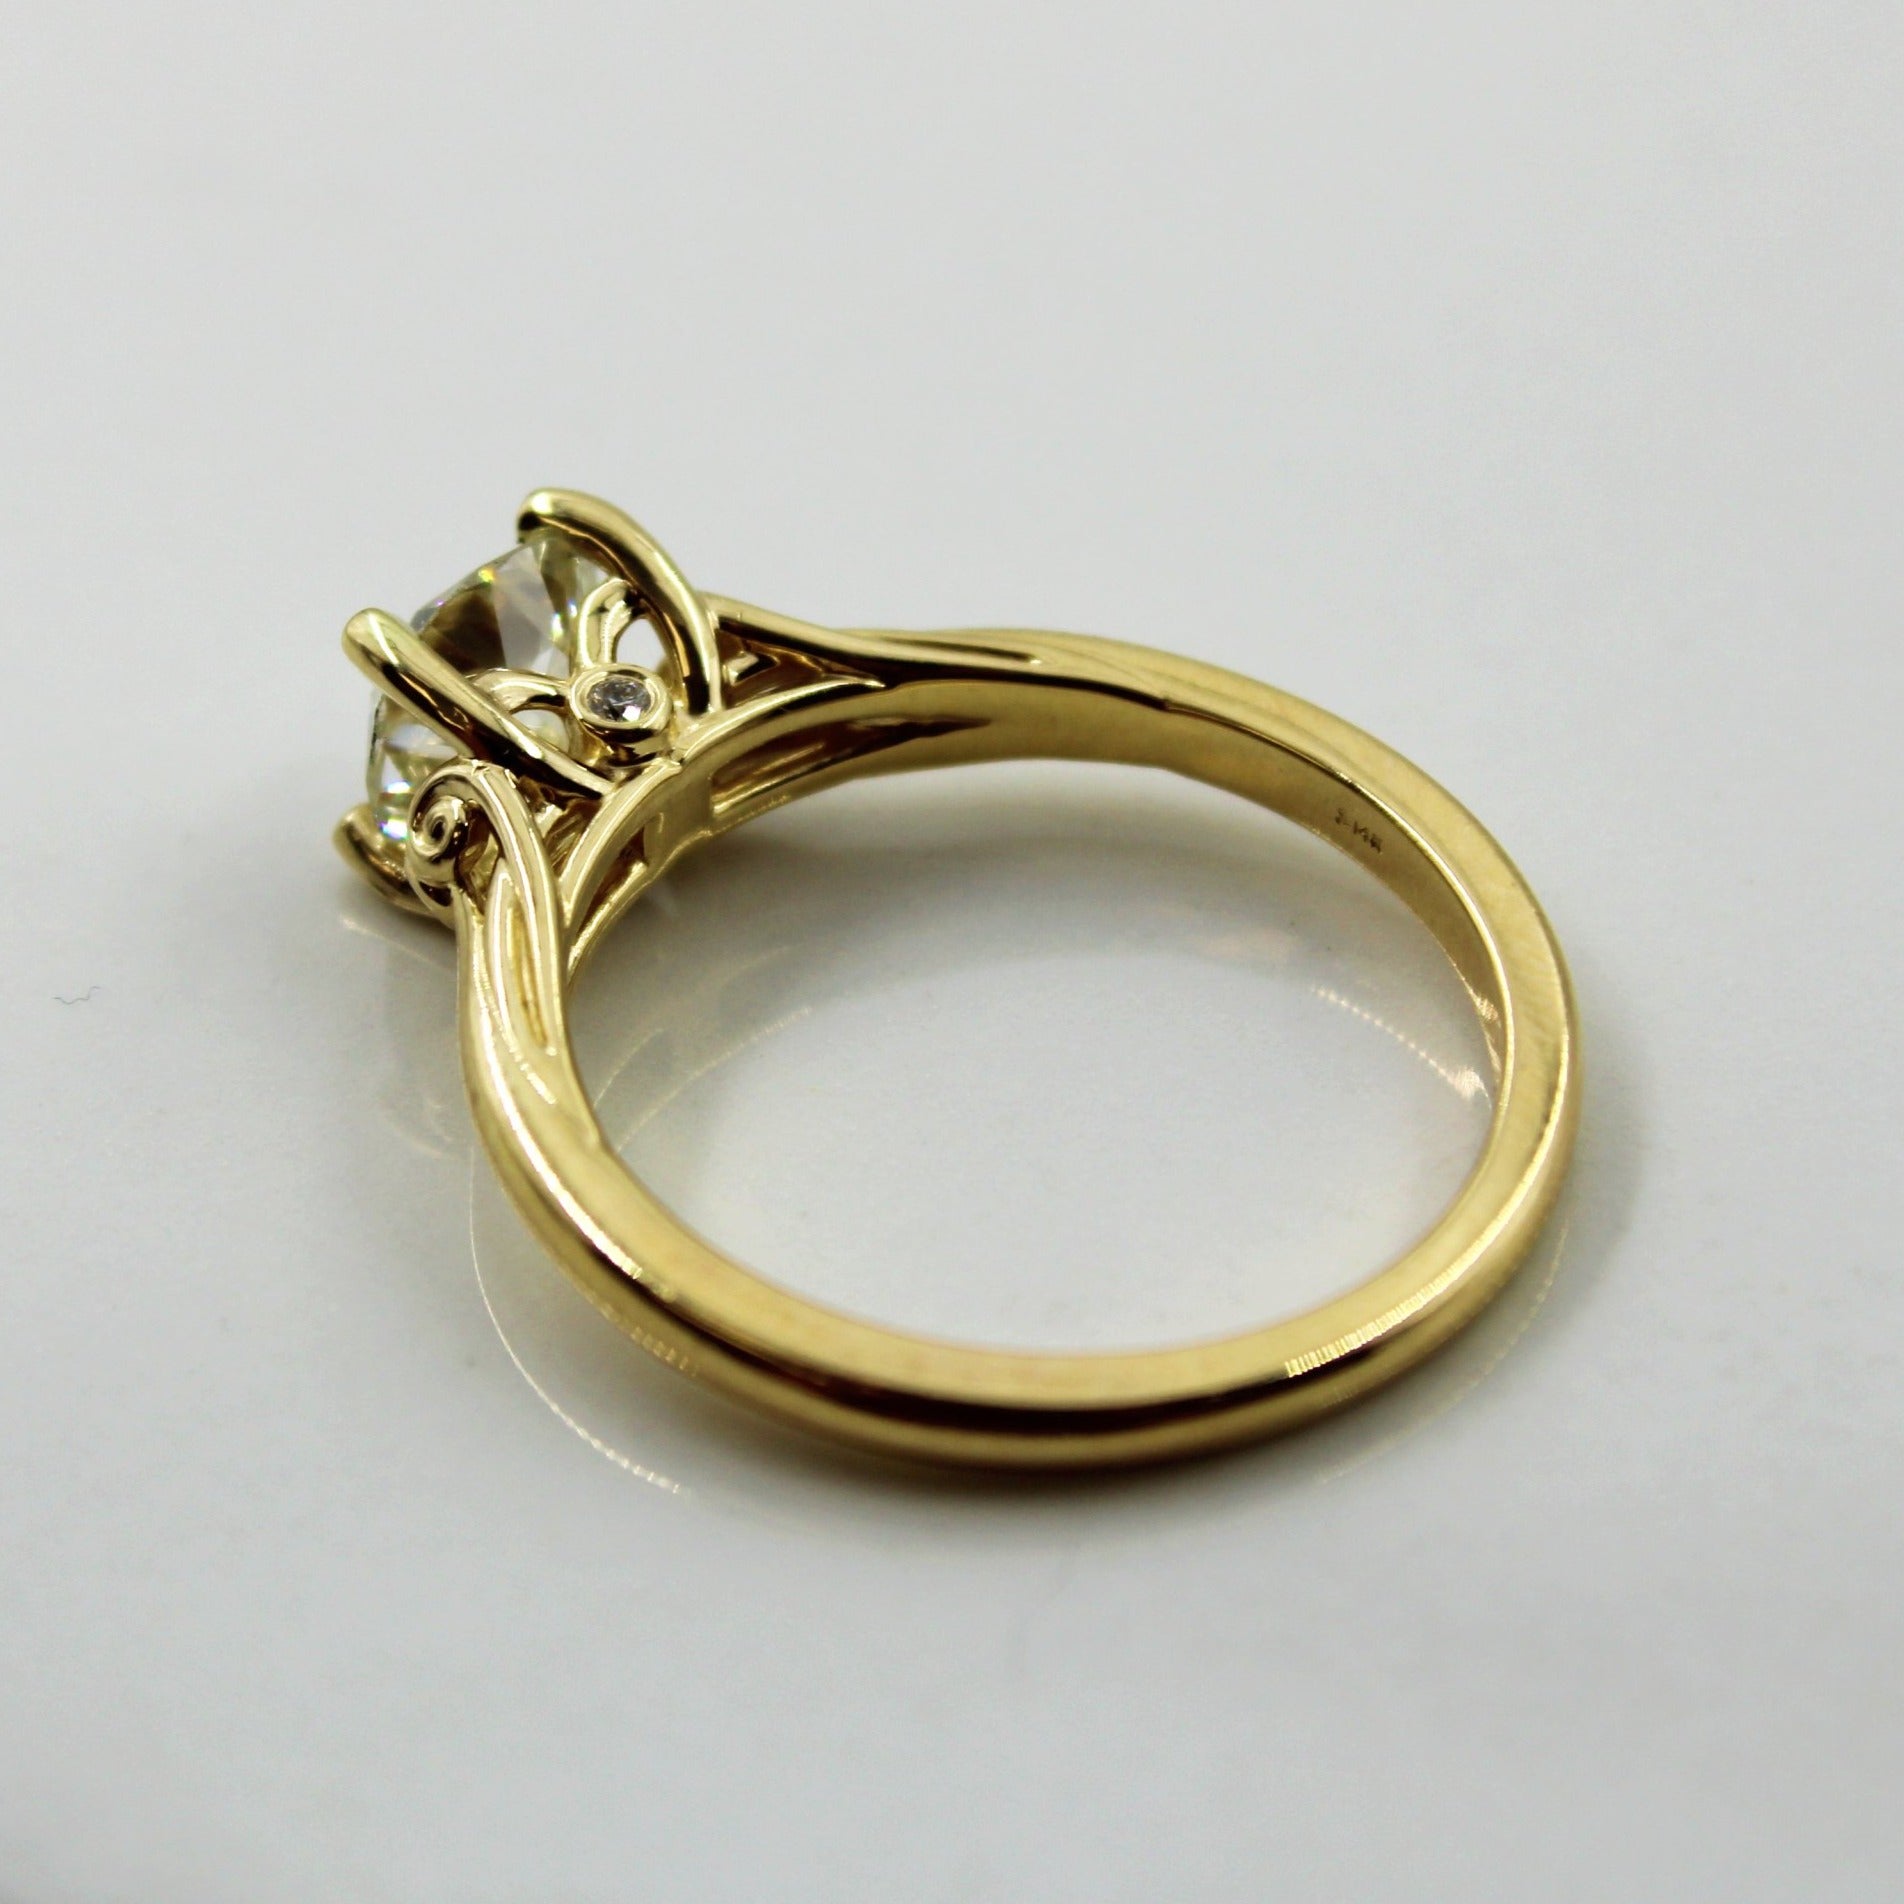 'Bespoke' Diamond Detailed Gallery Engagement Ring | 1.26ct | SZ 7 |